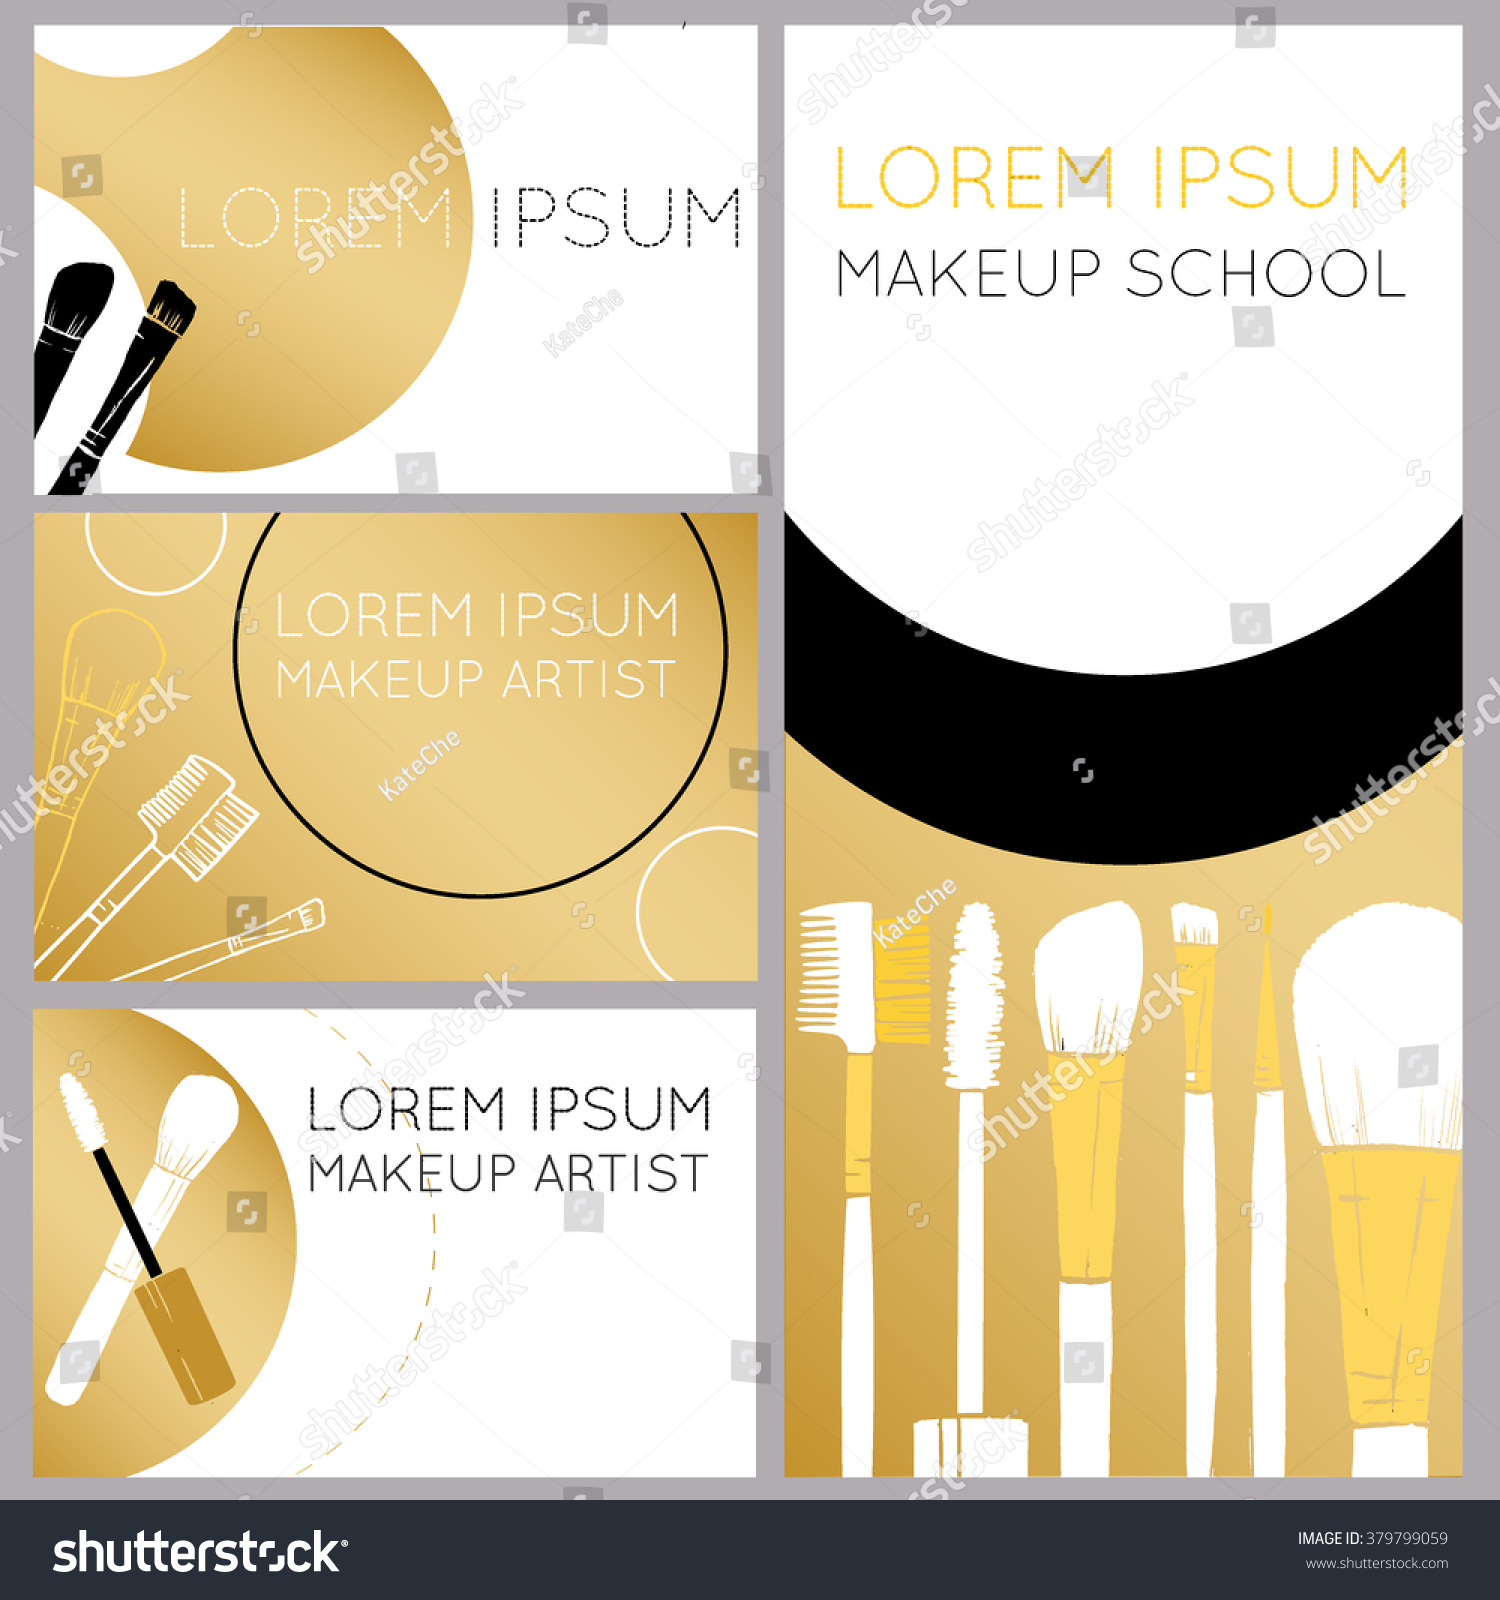 Makeup Artist Business Cards Flyerbannerposter Template With Makeup Artist Flyers Templates